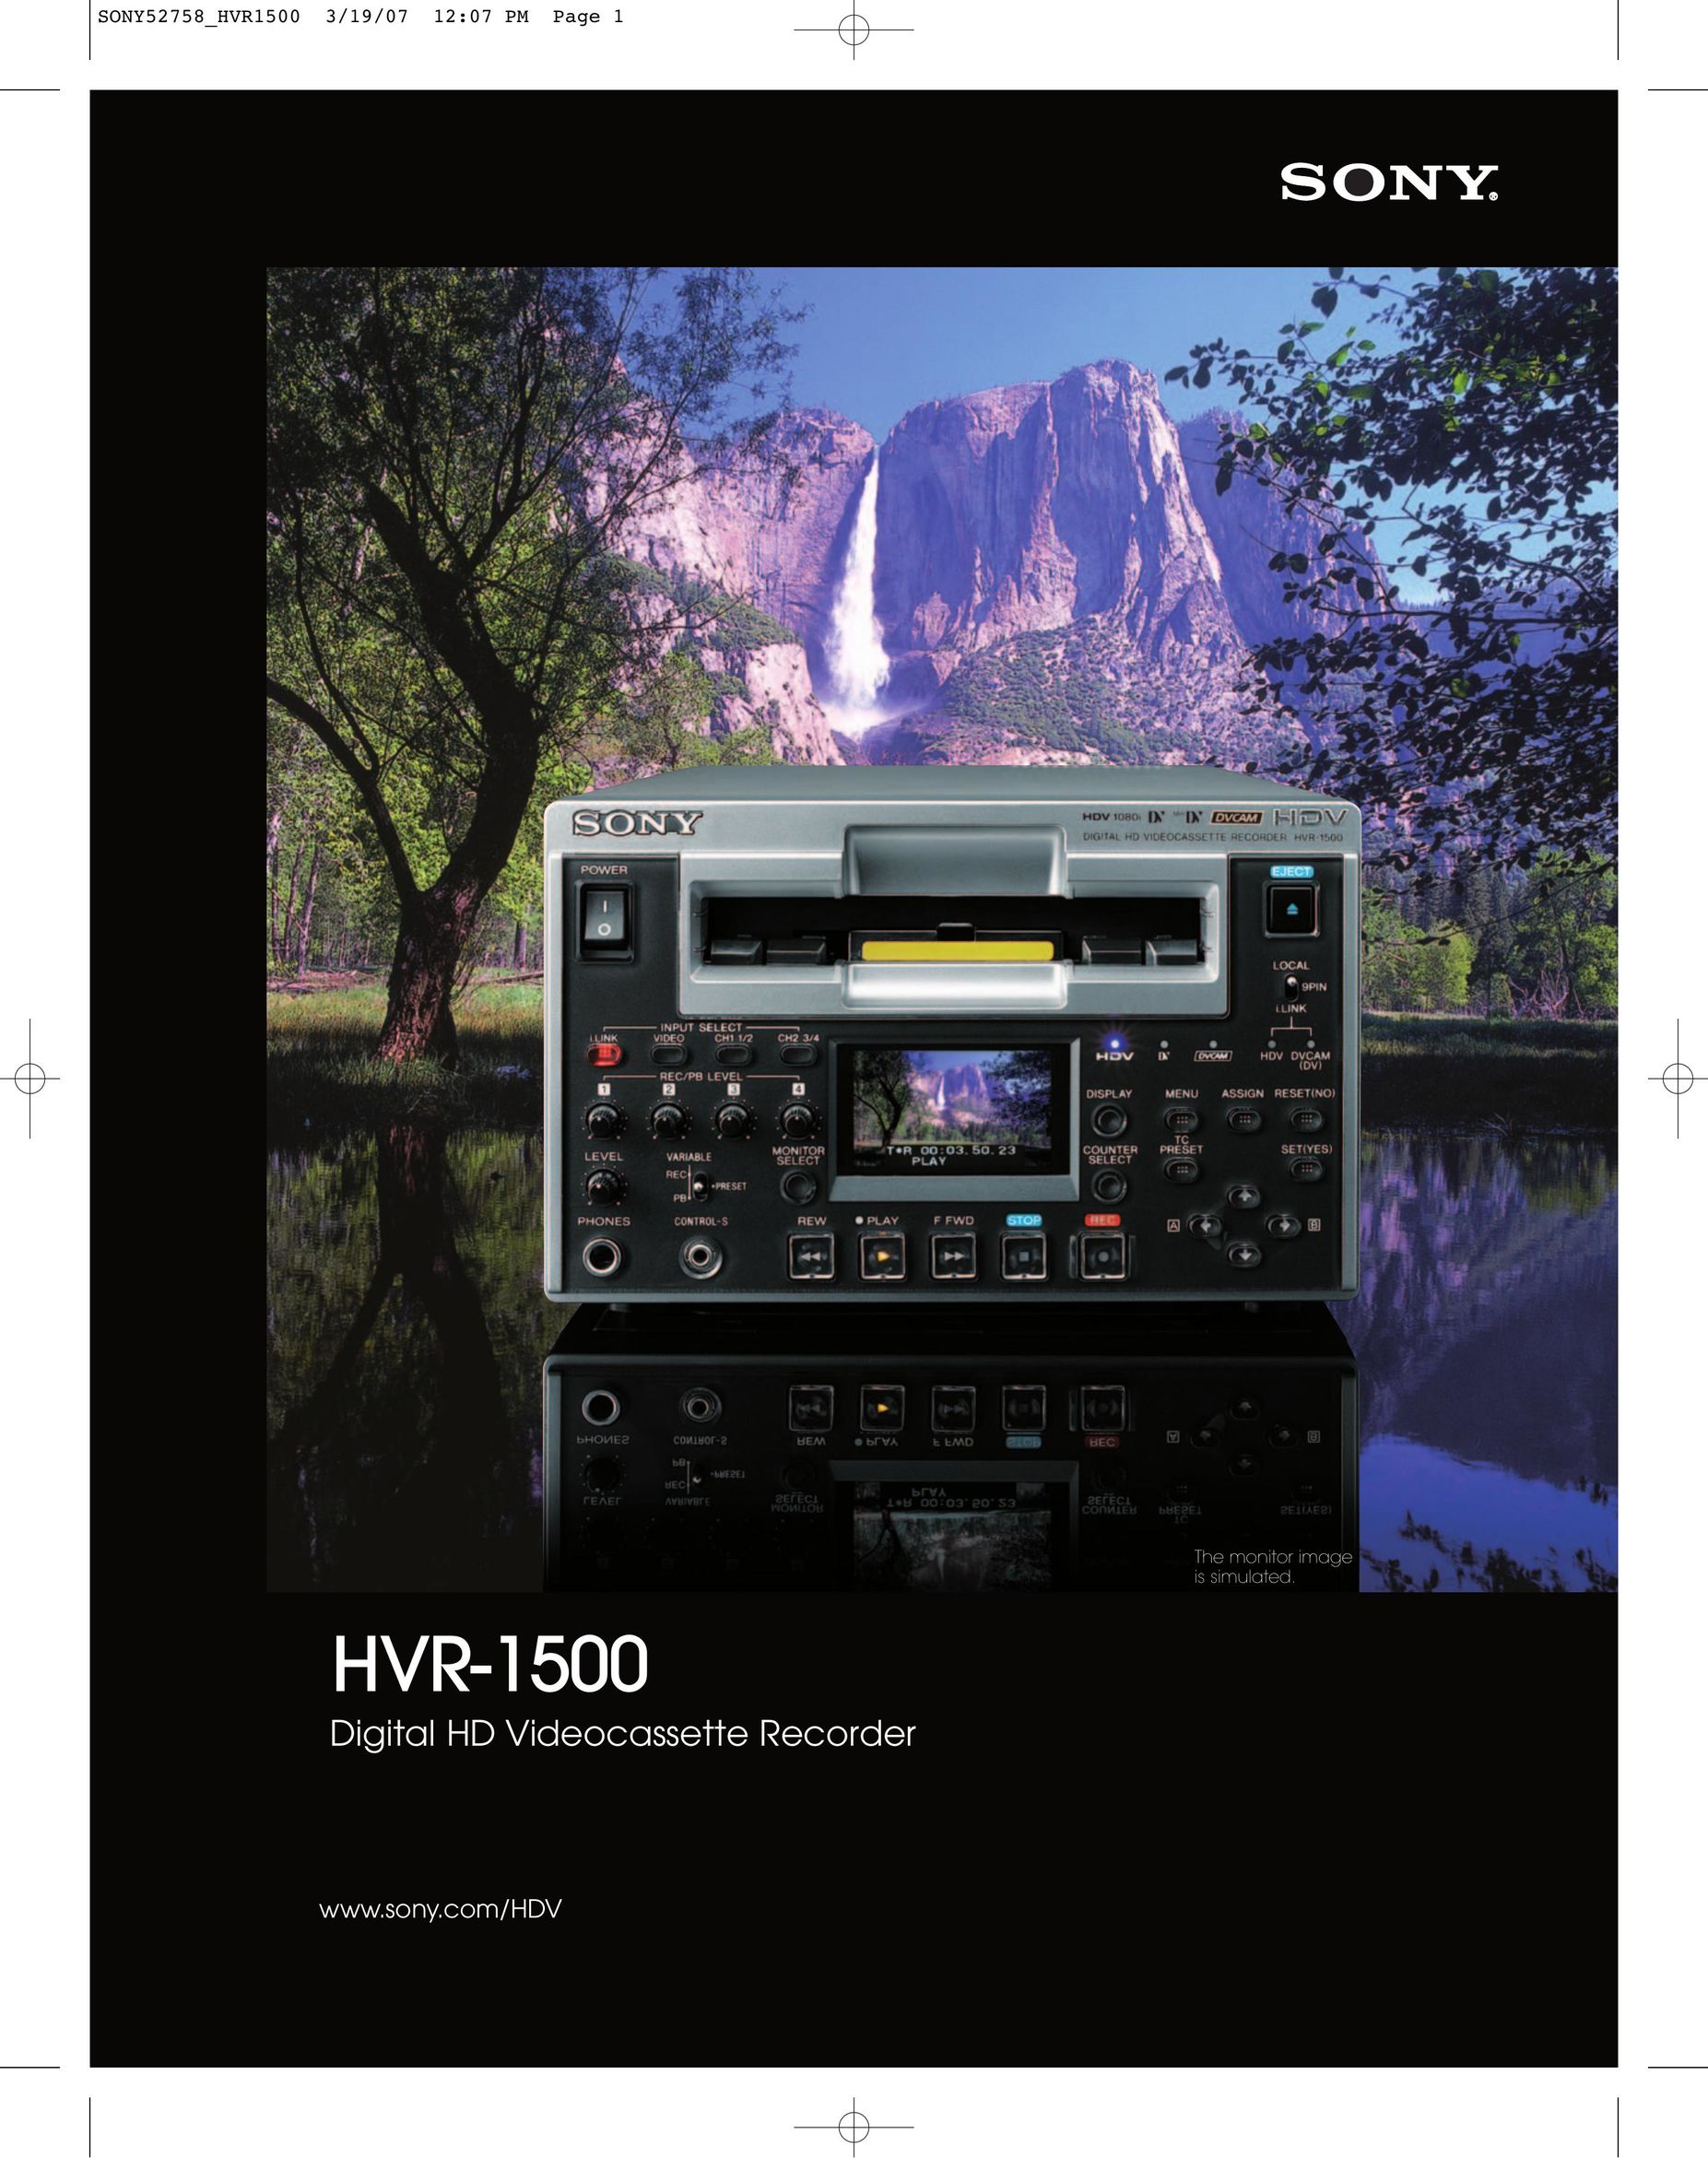 StarTech.com HVR-1500 VCR User Manual